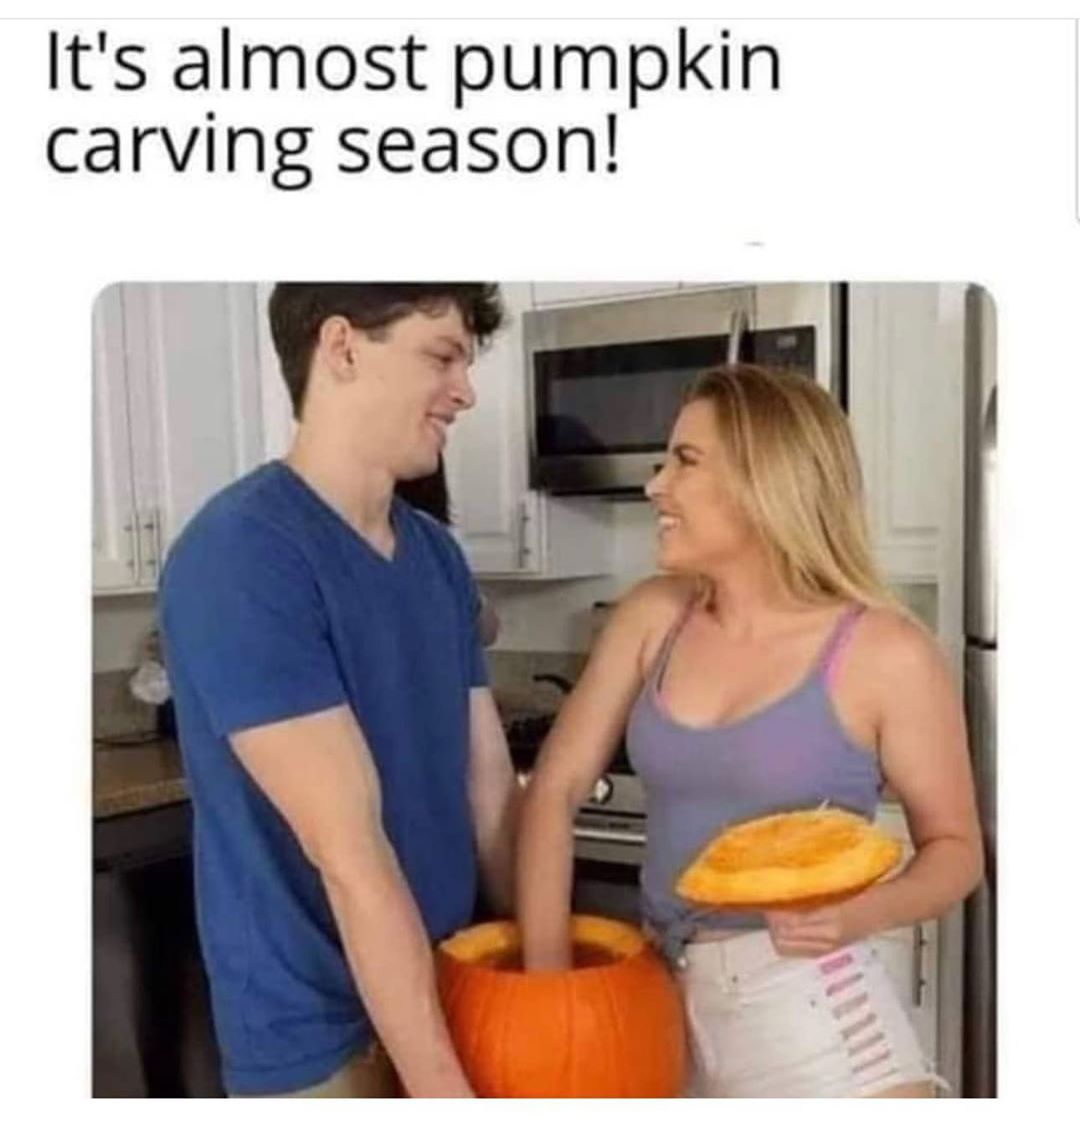 Pumpkin - It's almost pumpkin carving season!